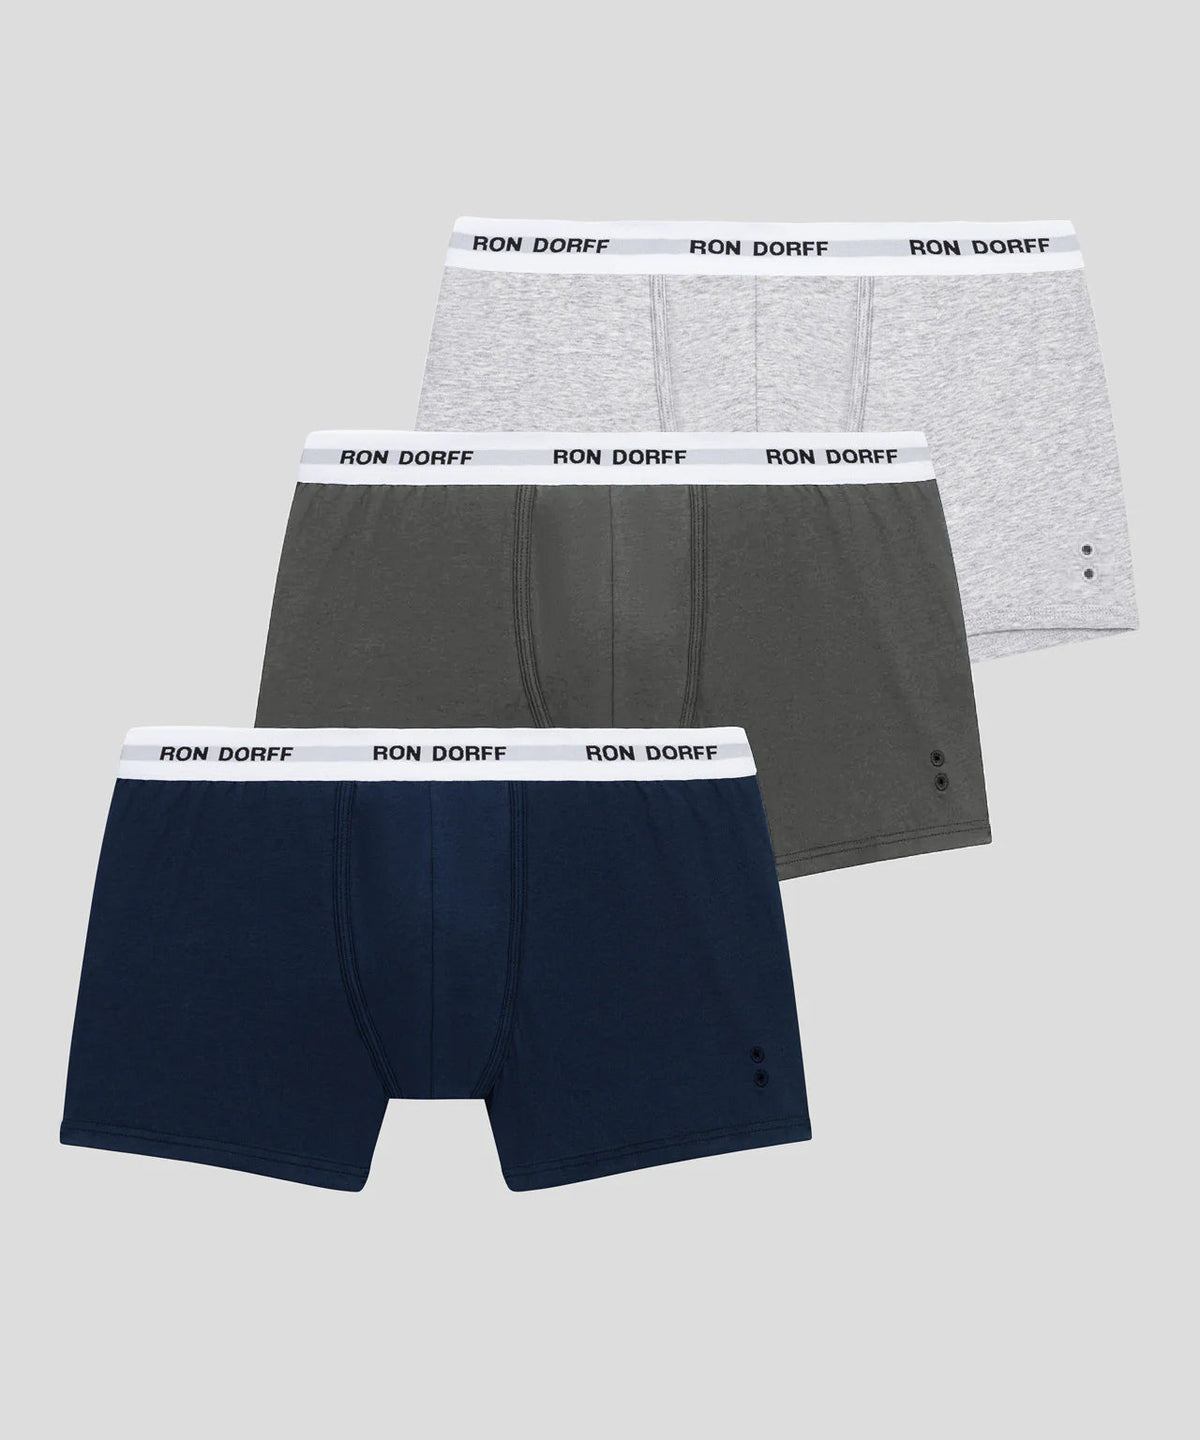 Ruobo underwear men's 69883D mid-waist boxer briefs solid color